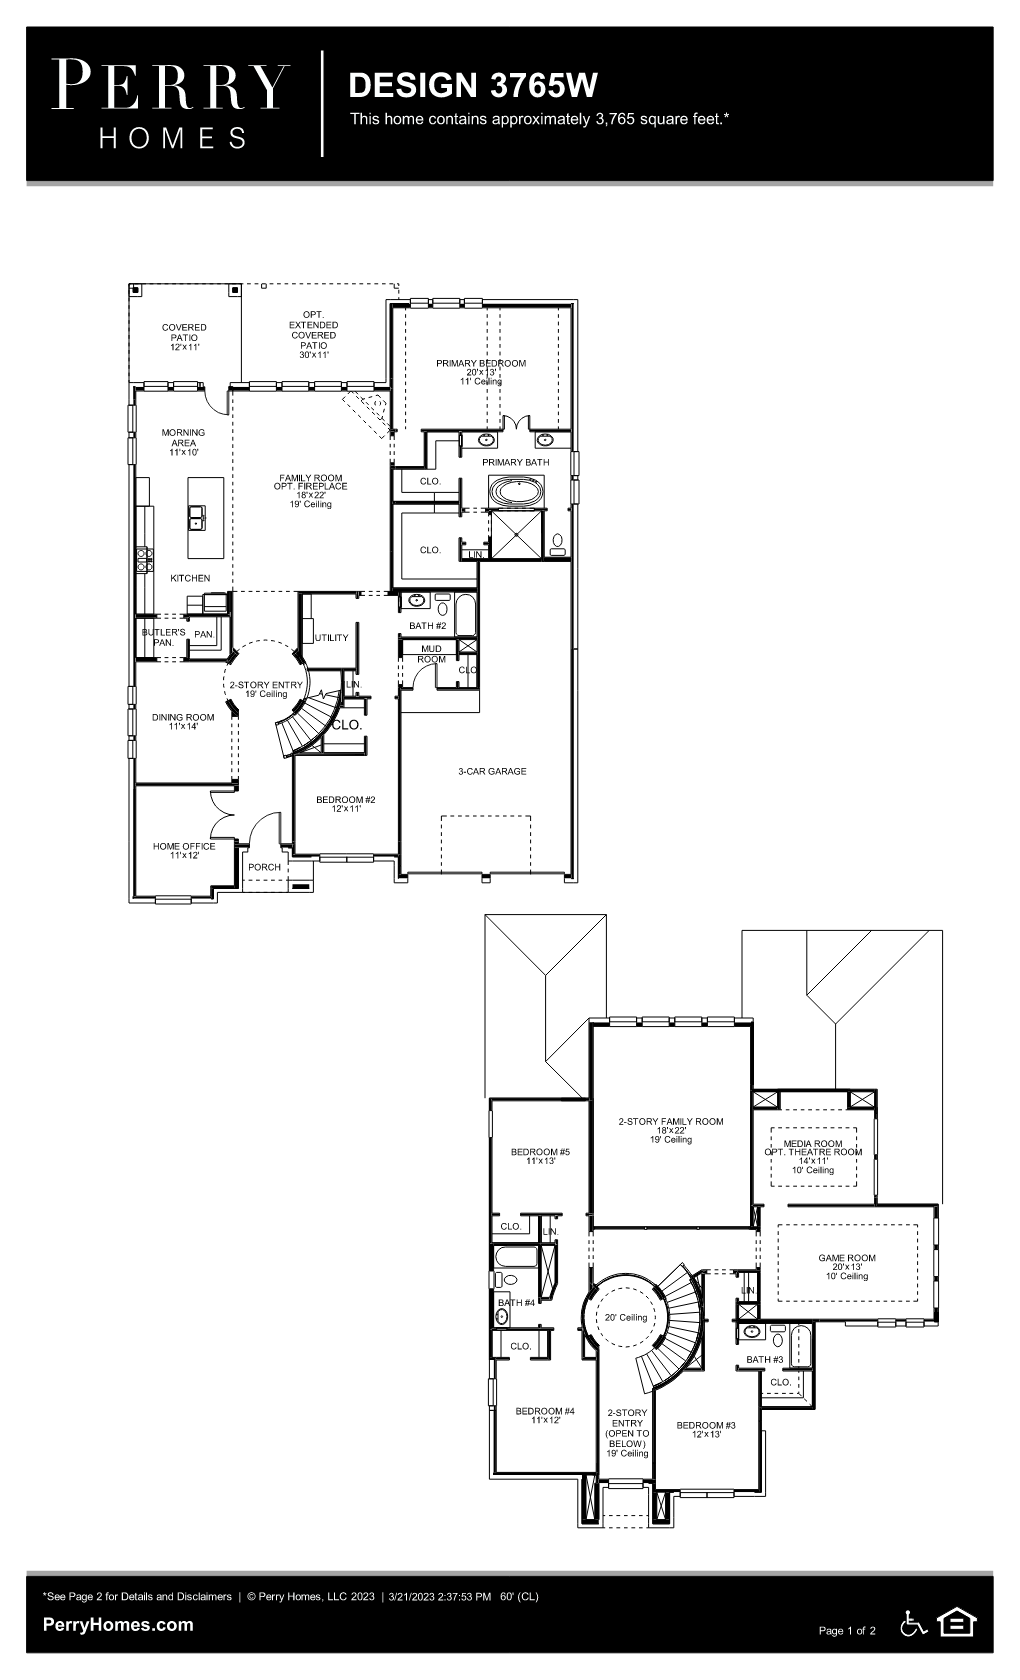 Floor Plan for 3765W